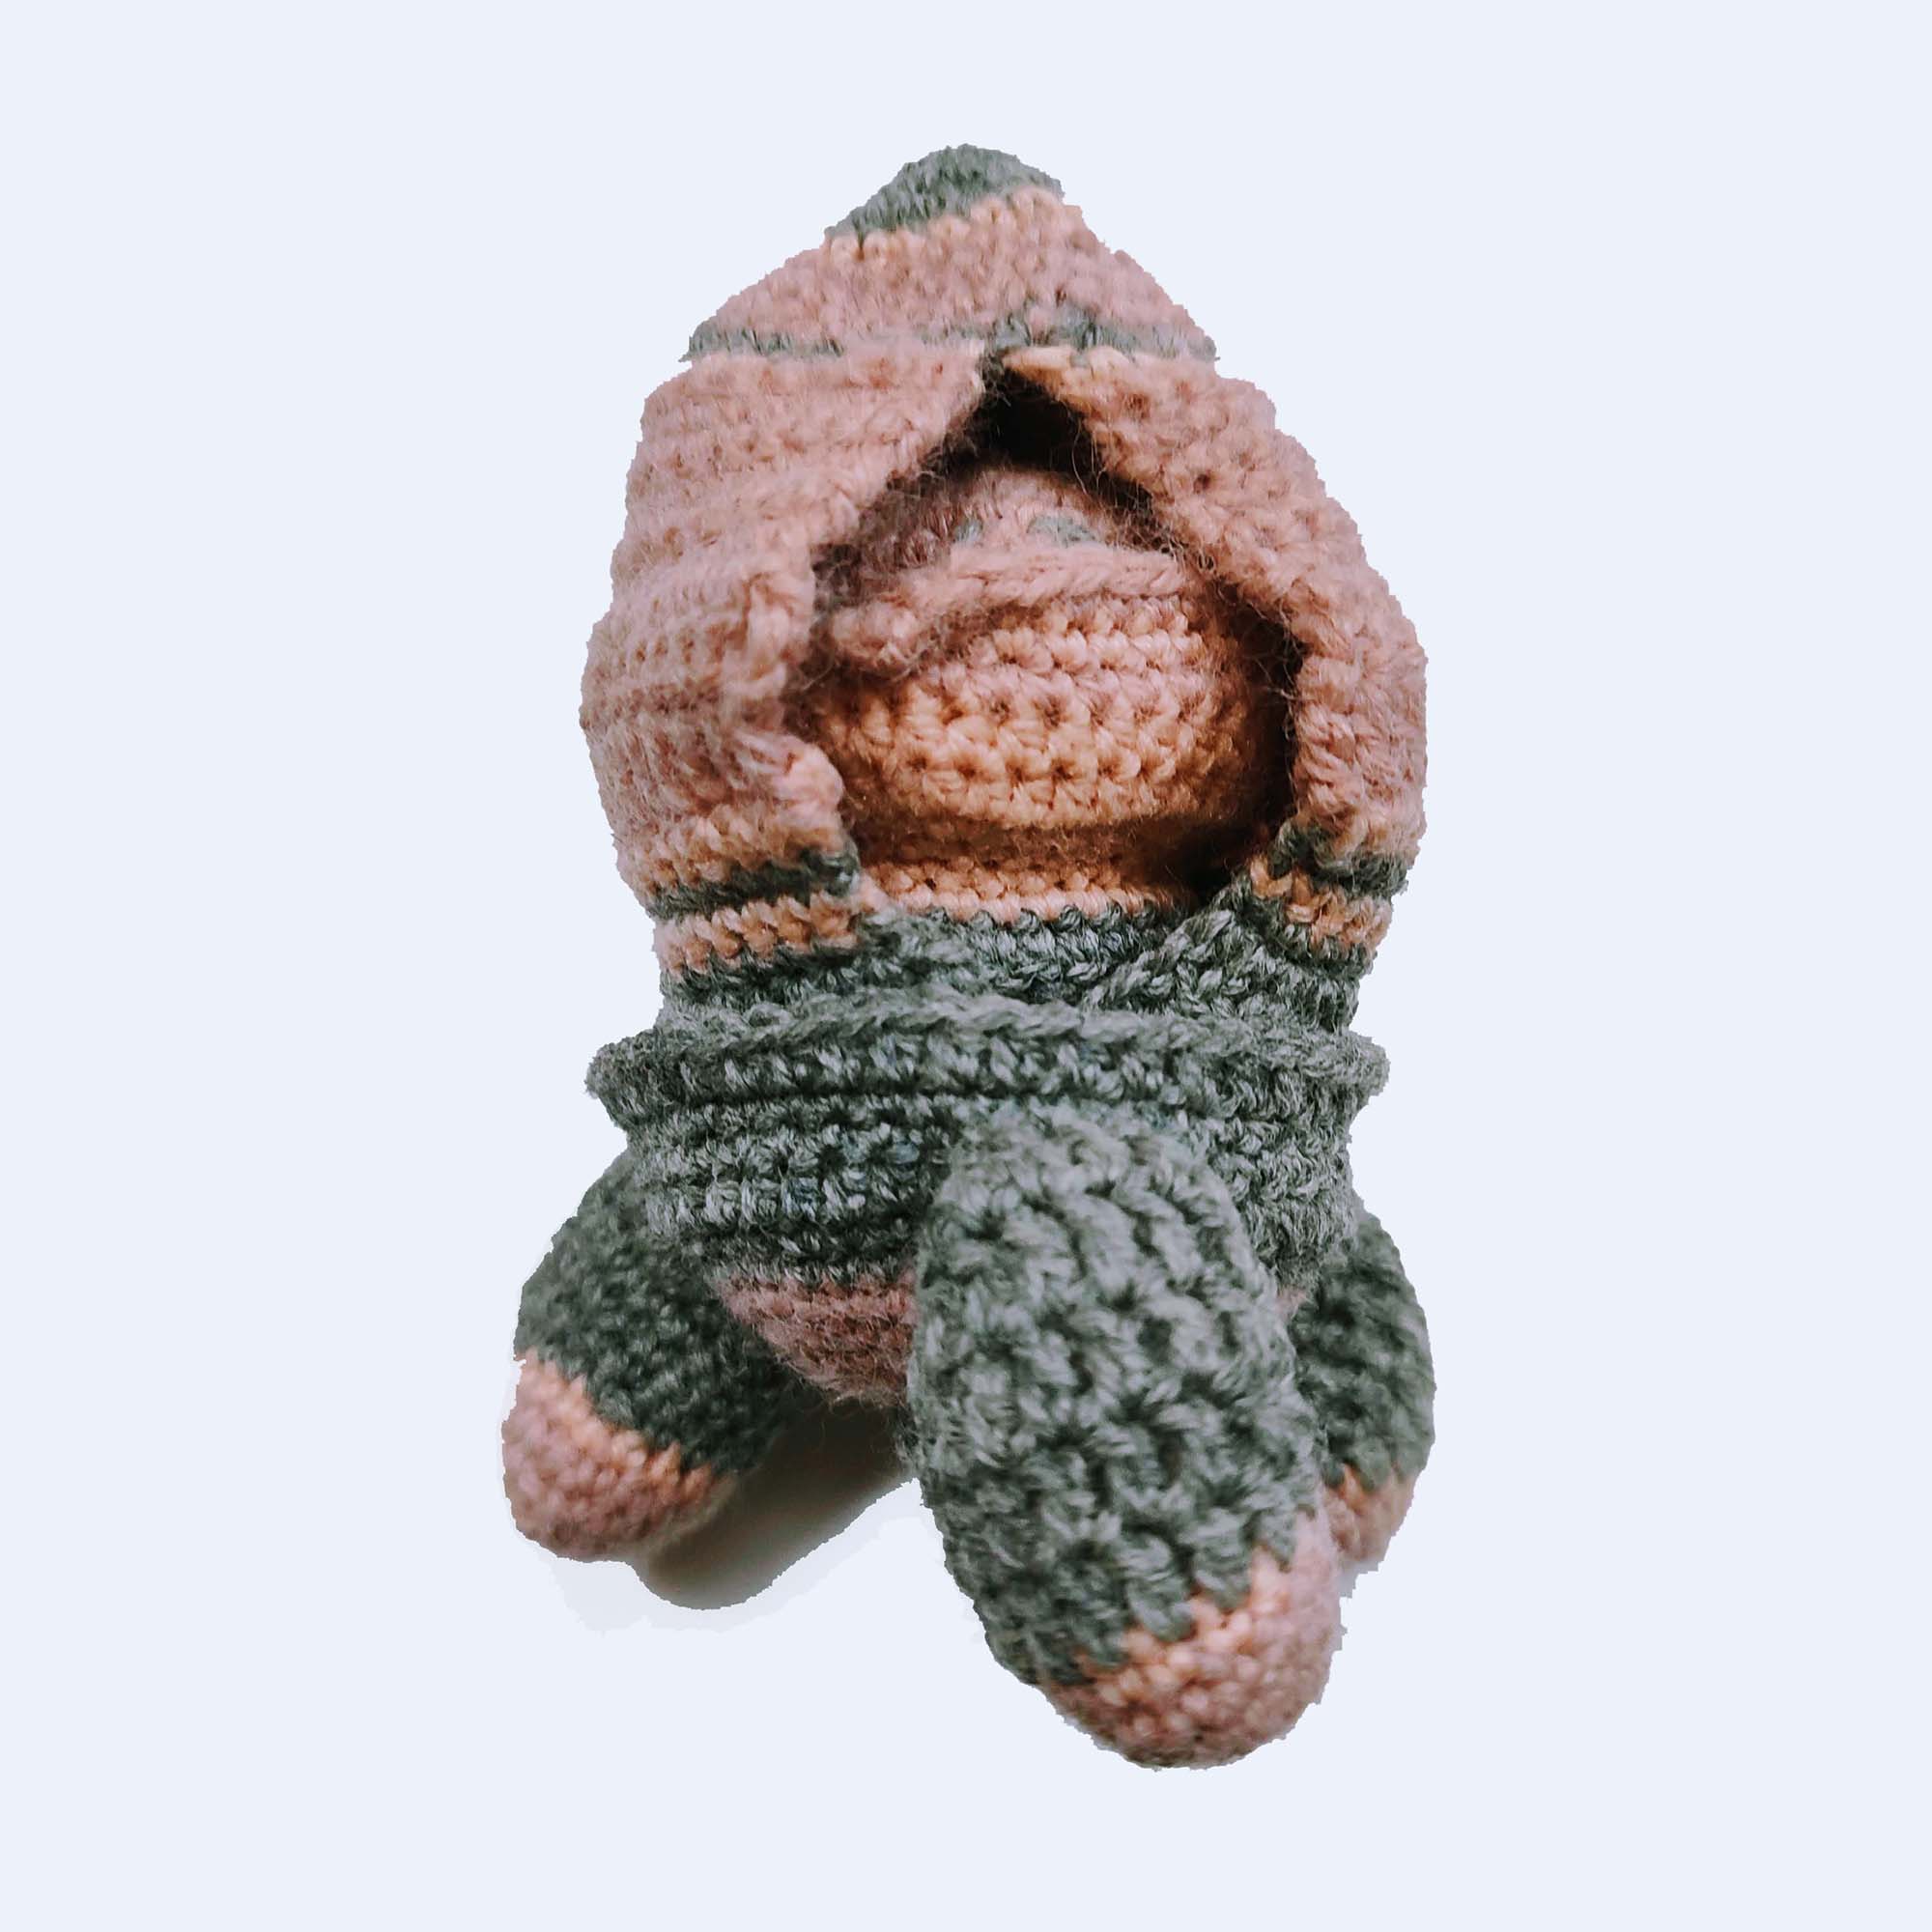 cookies and cream-colored crocheted toy bun alien hidden in rocket ship